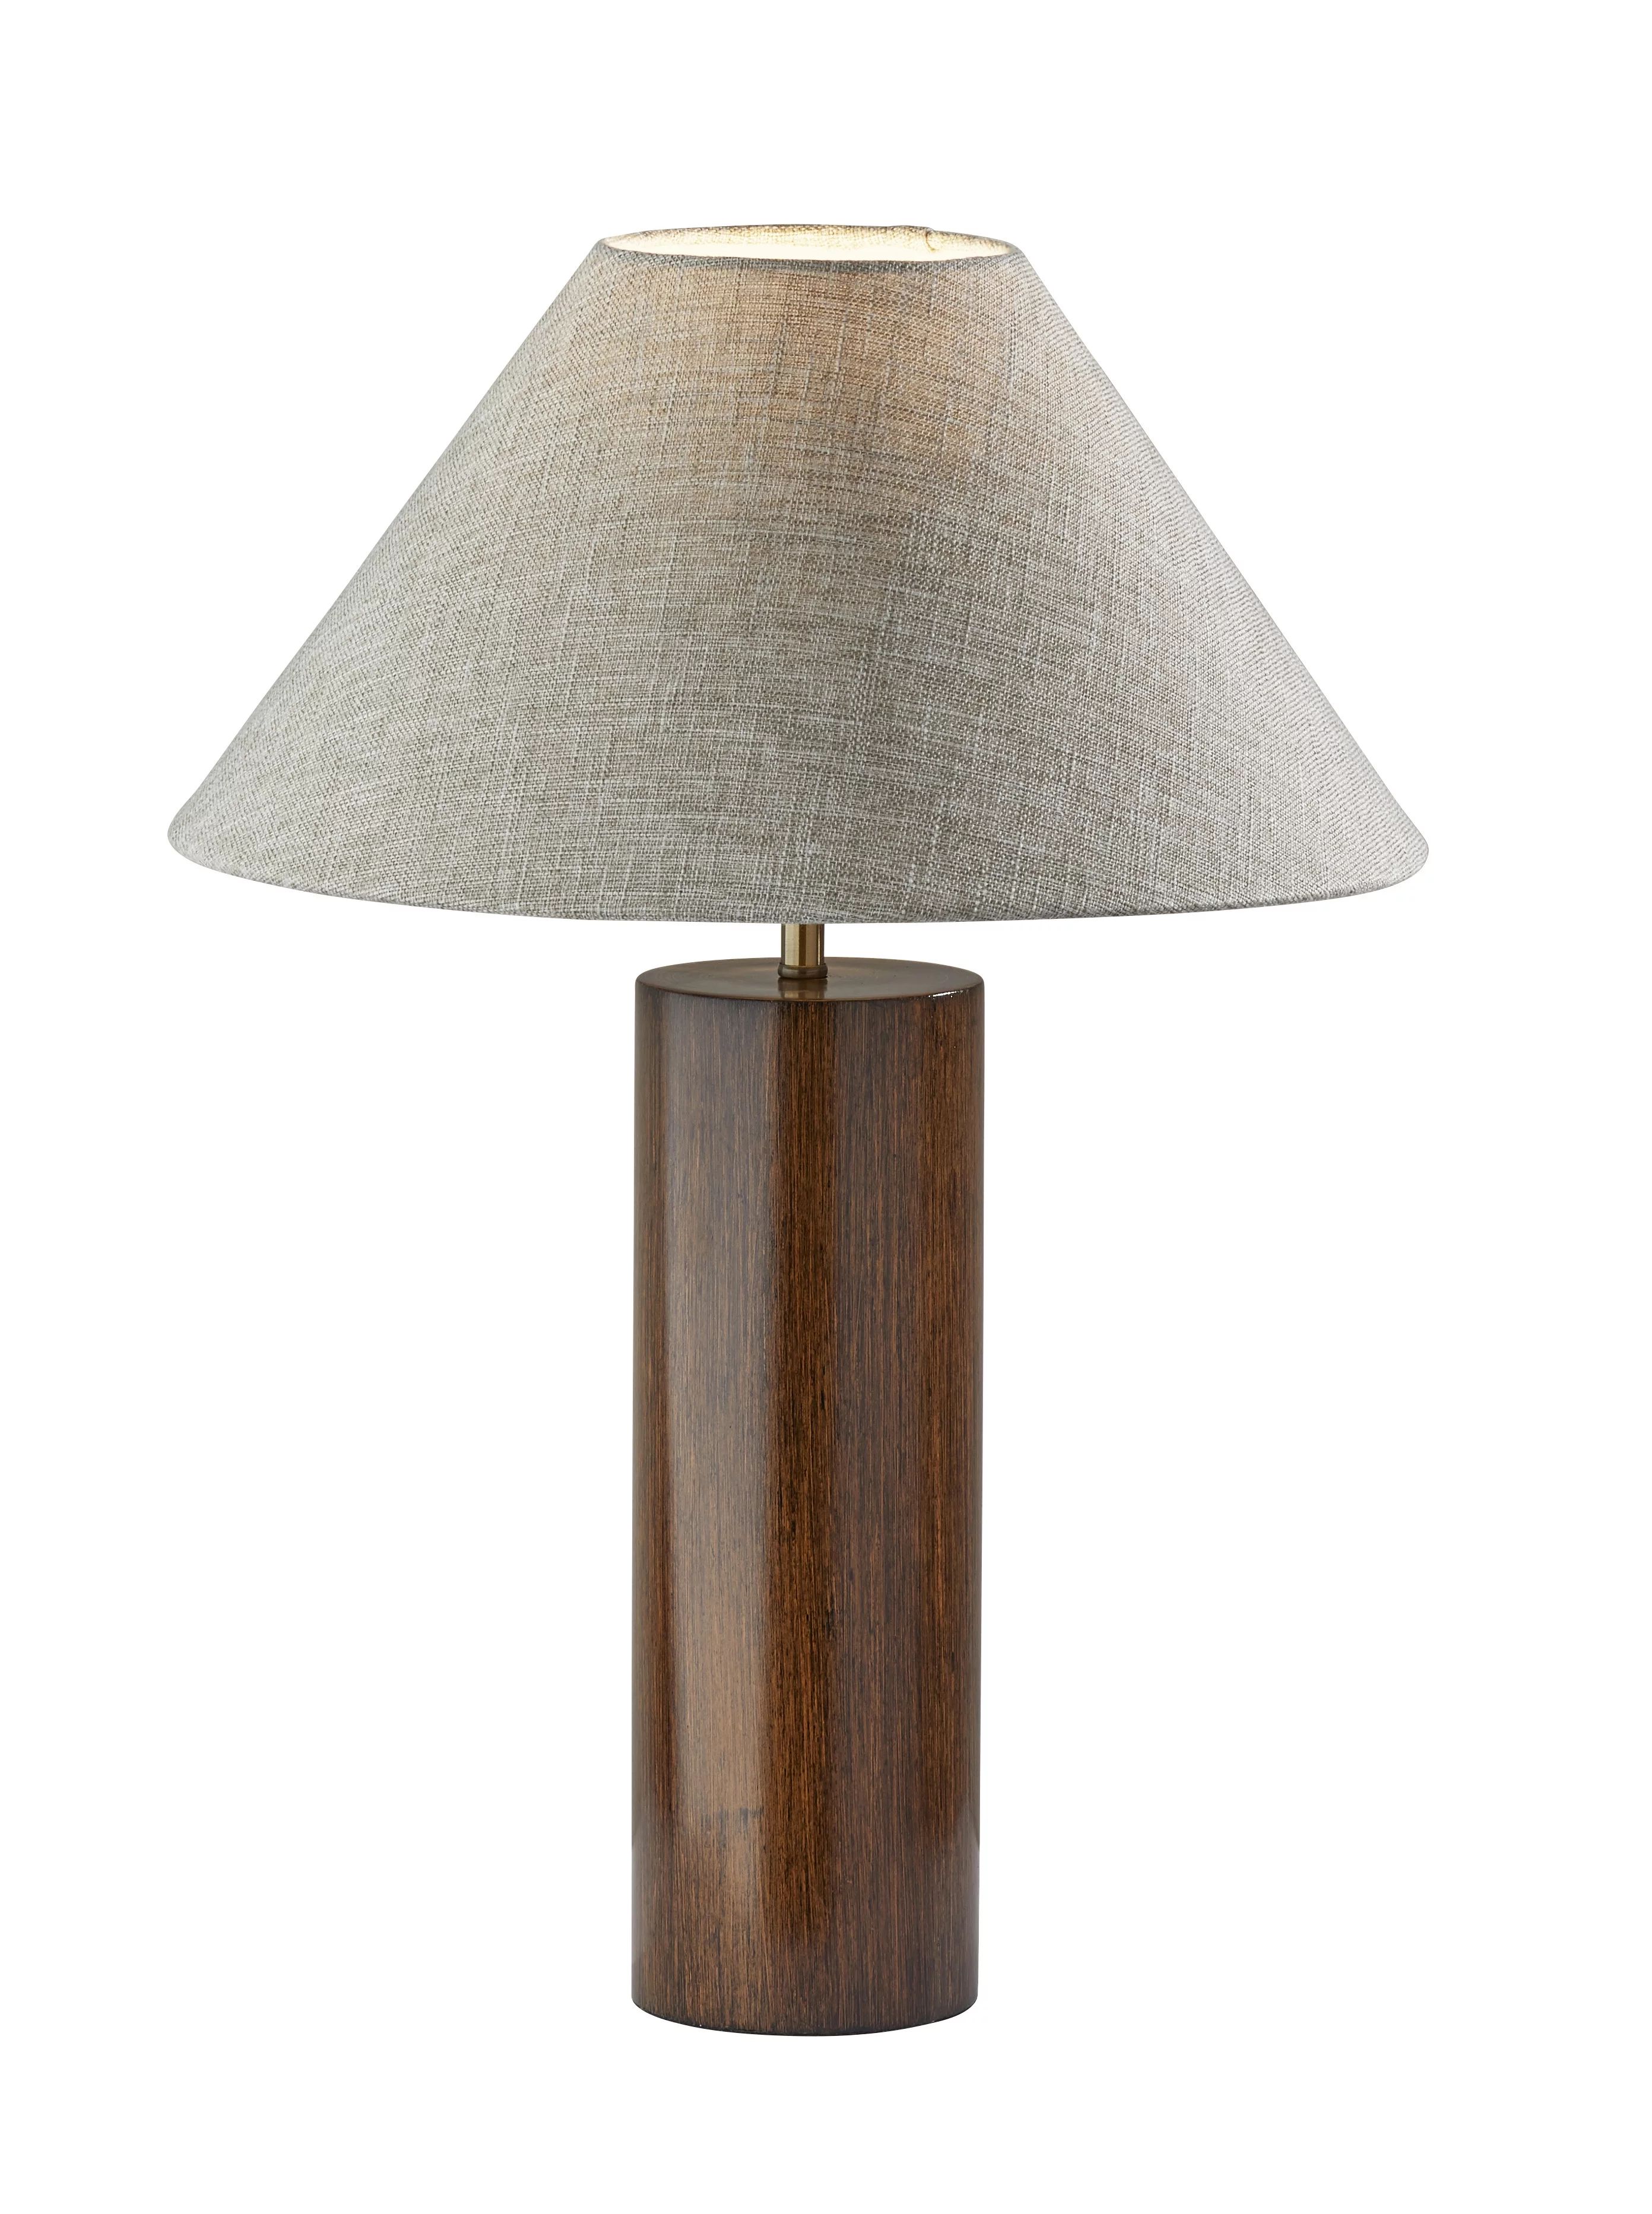 Adesso Martin Table Lamp, Walnut Poplar Wood with Antique Brass Accent | Walmart (US)